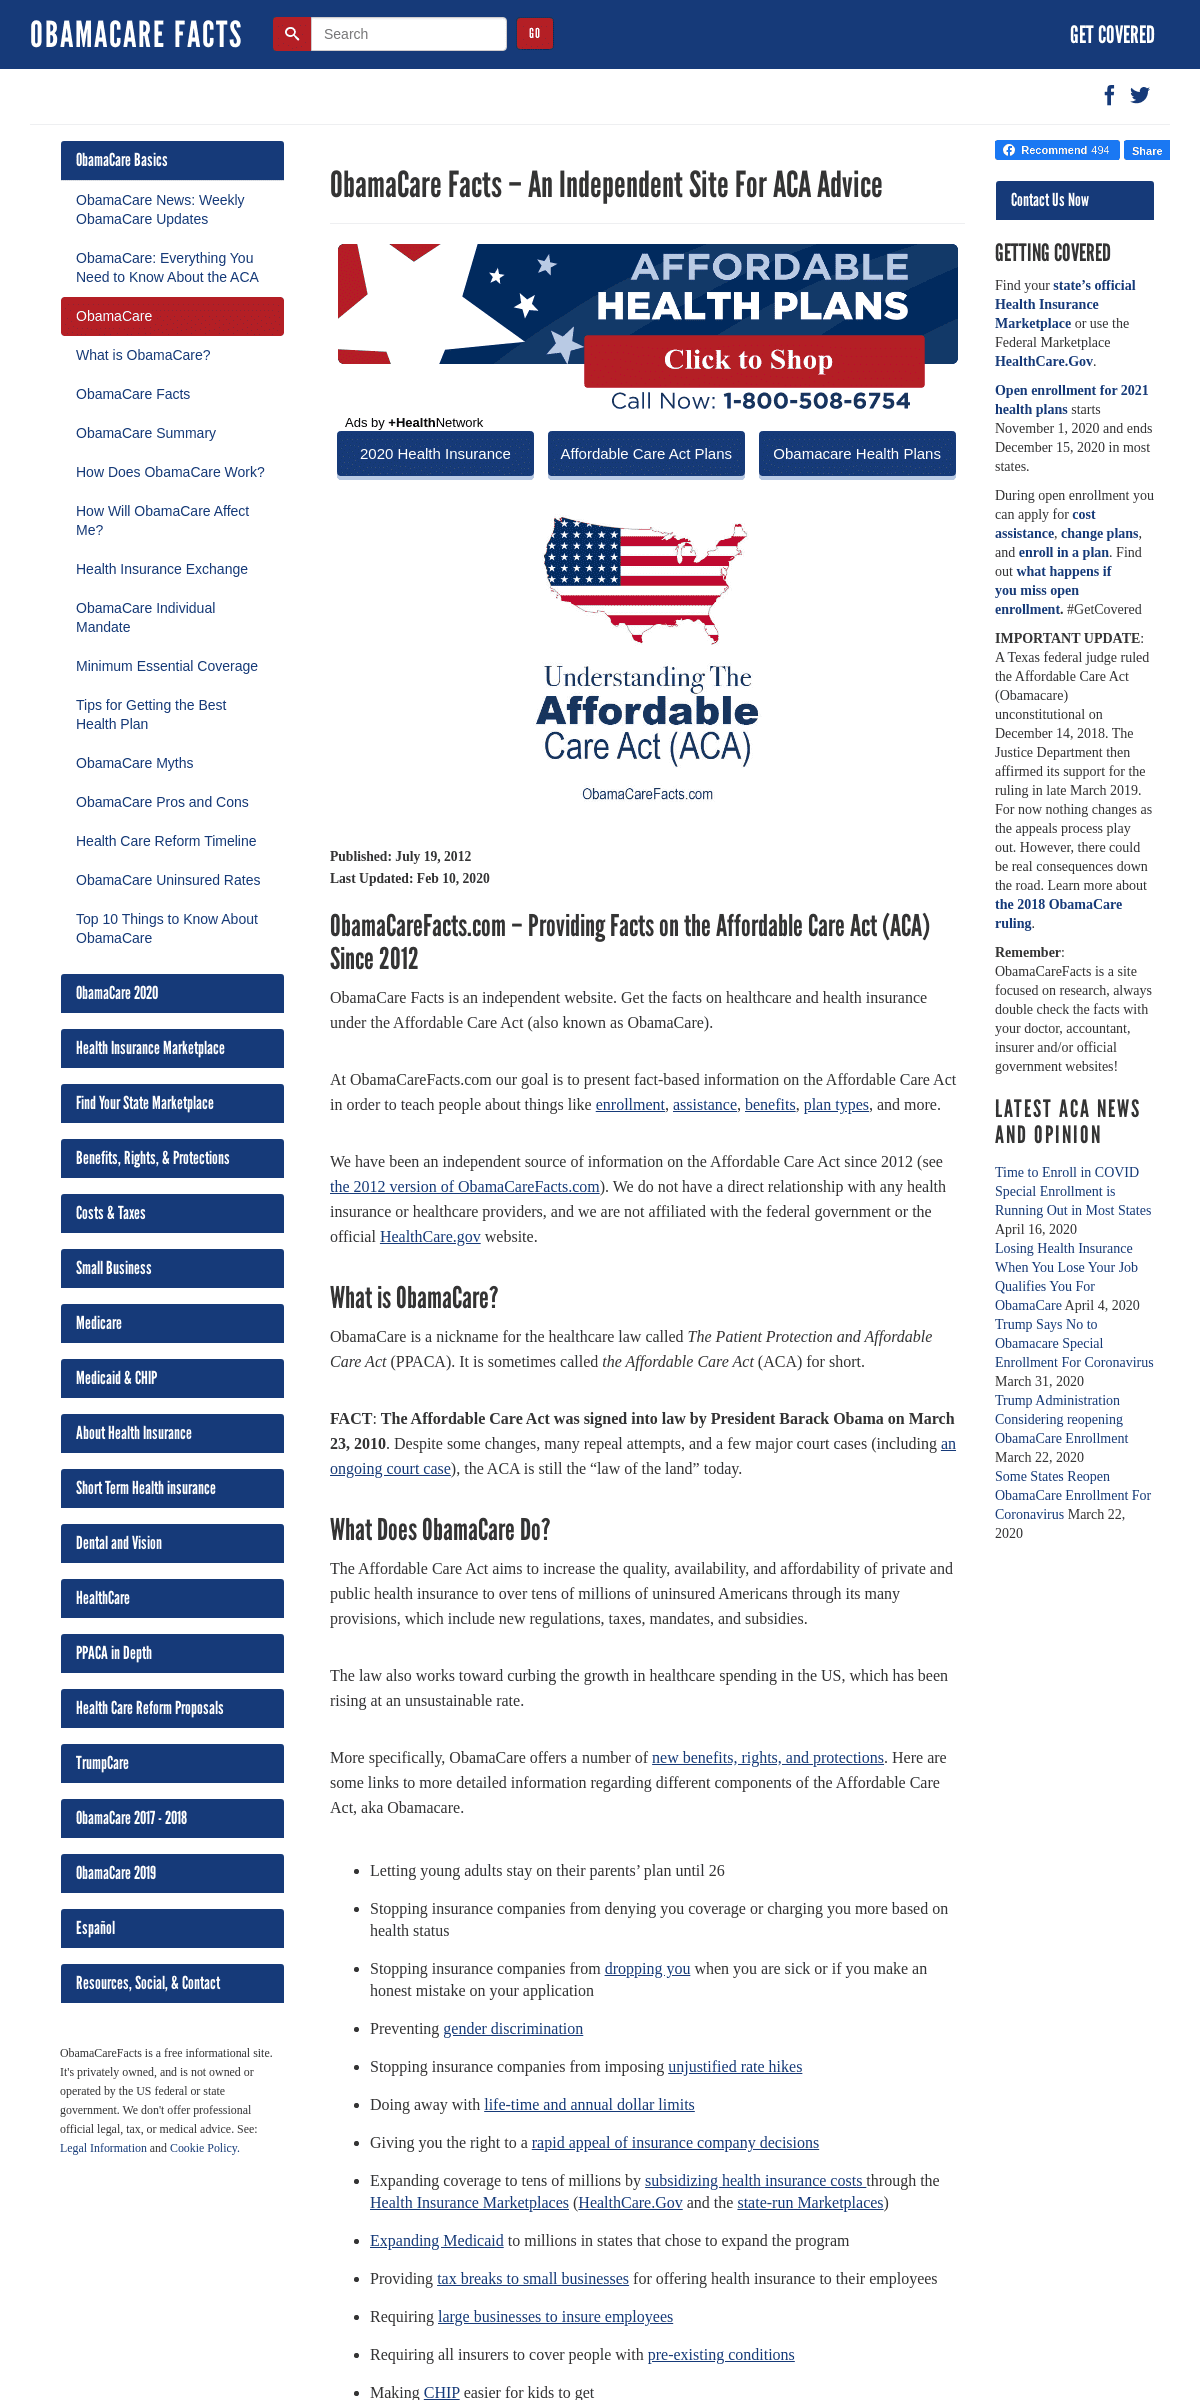 A complete backup of obamacarefacts.com